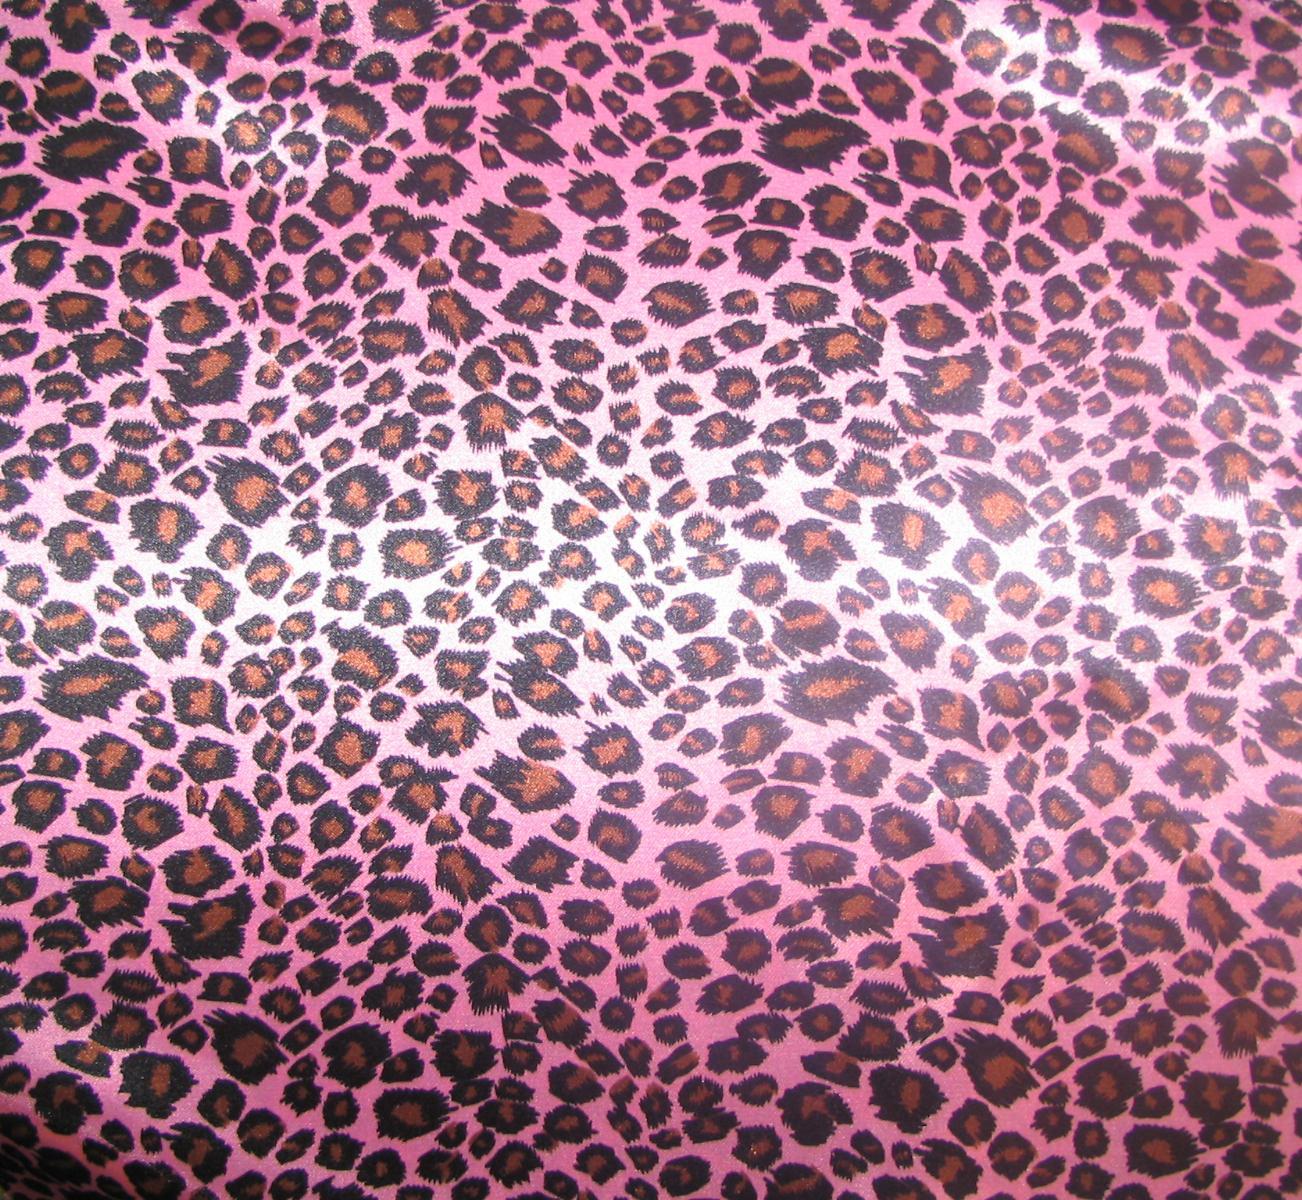 Light Pink Leopard Print Backgrounds